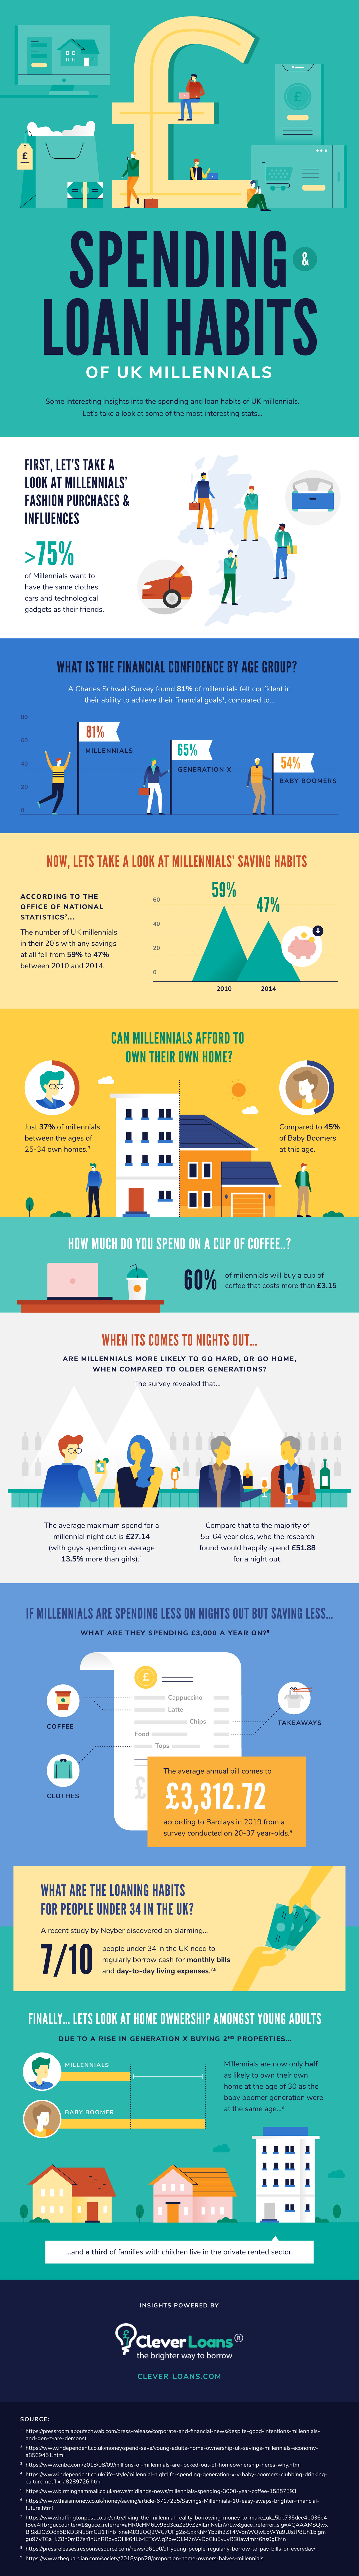 Infographic for Spending Loan Habits of UK Millennials